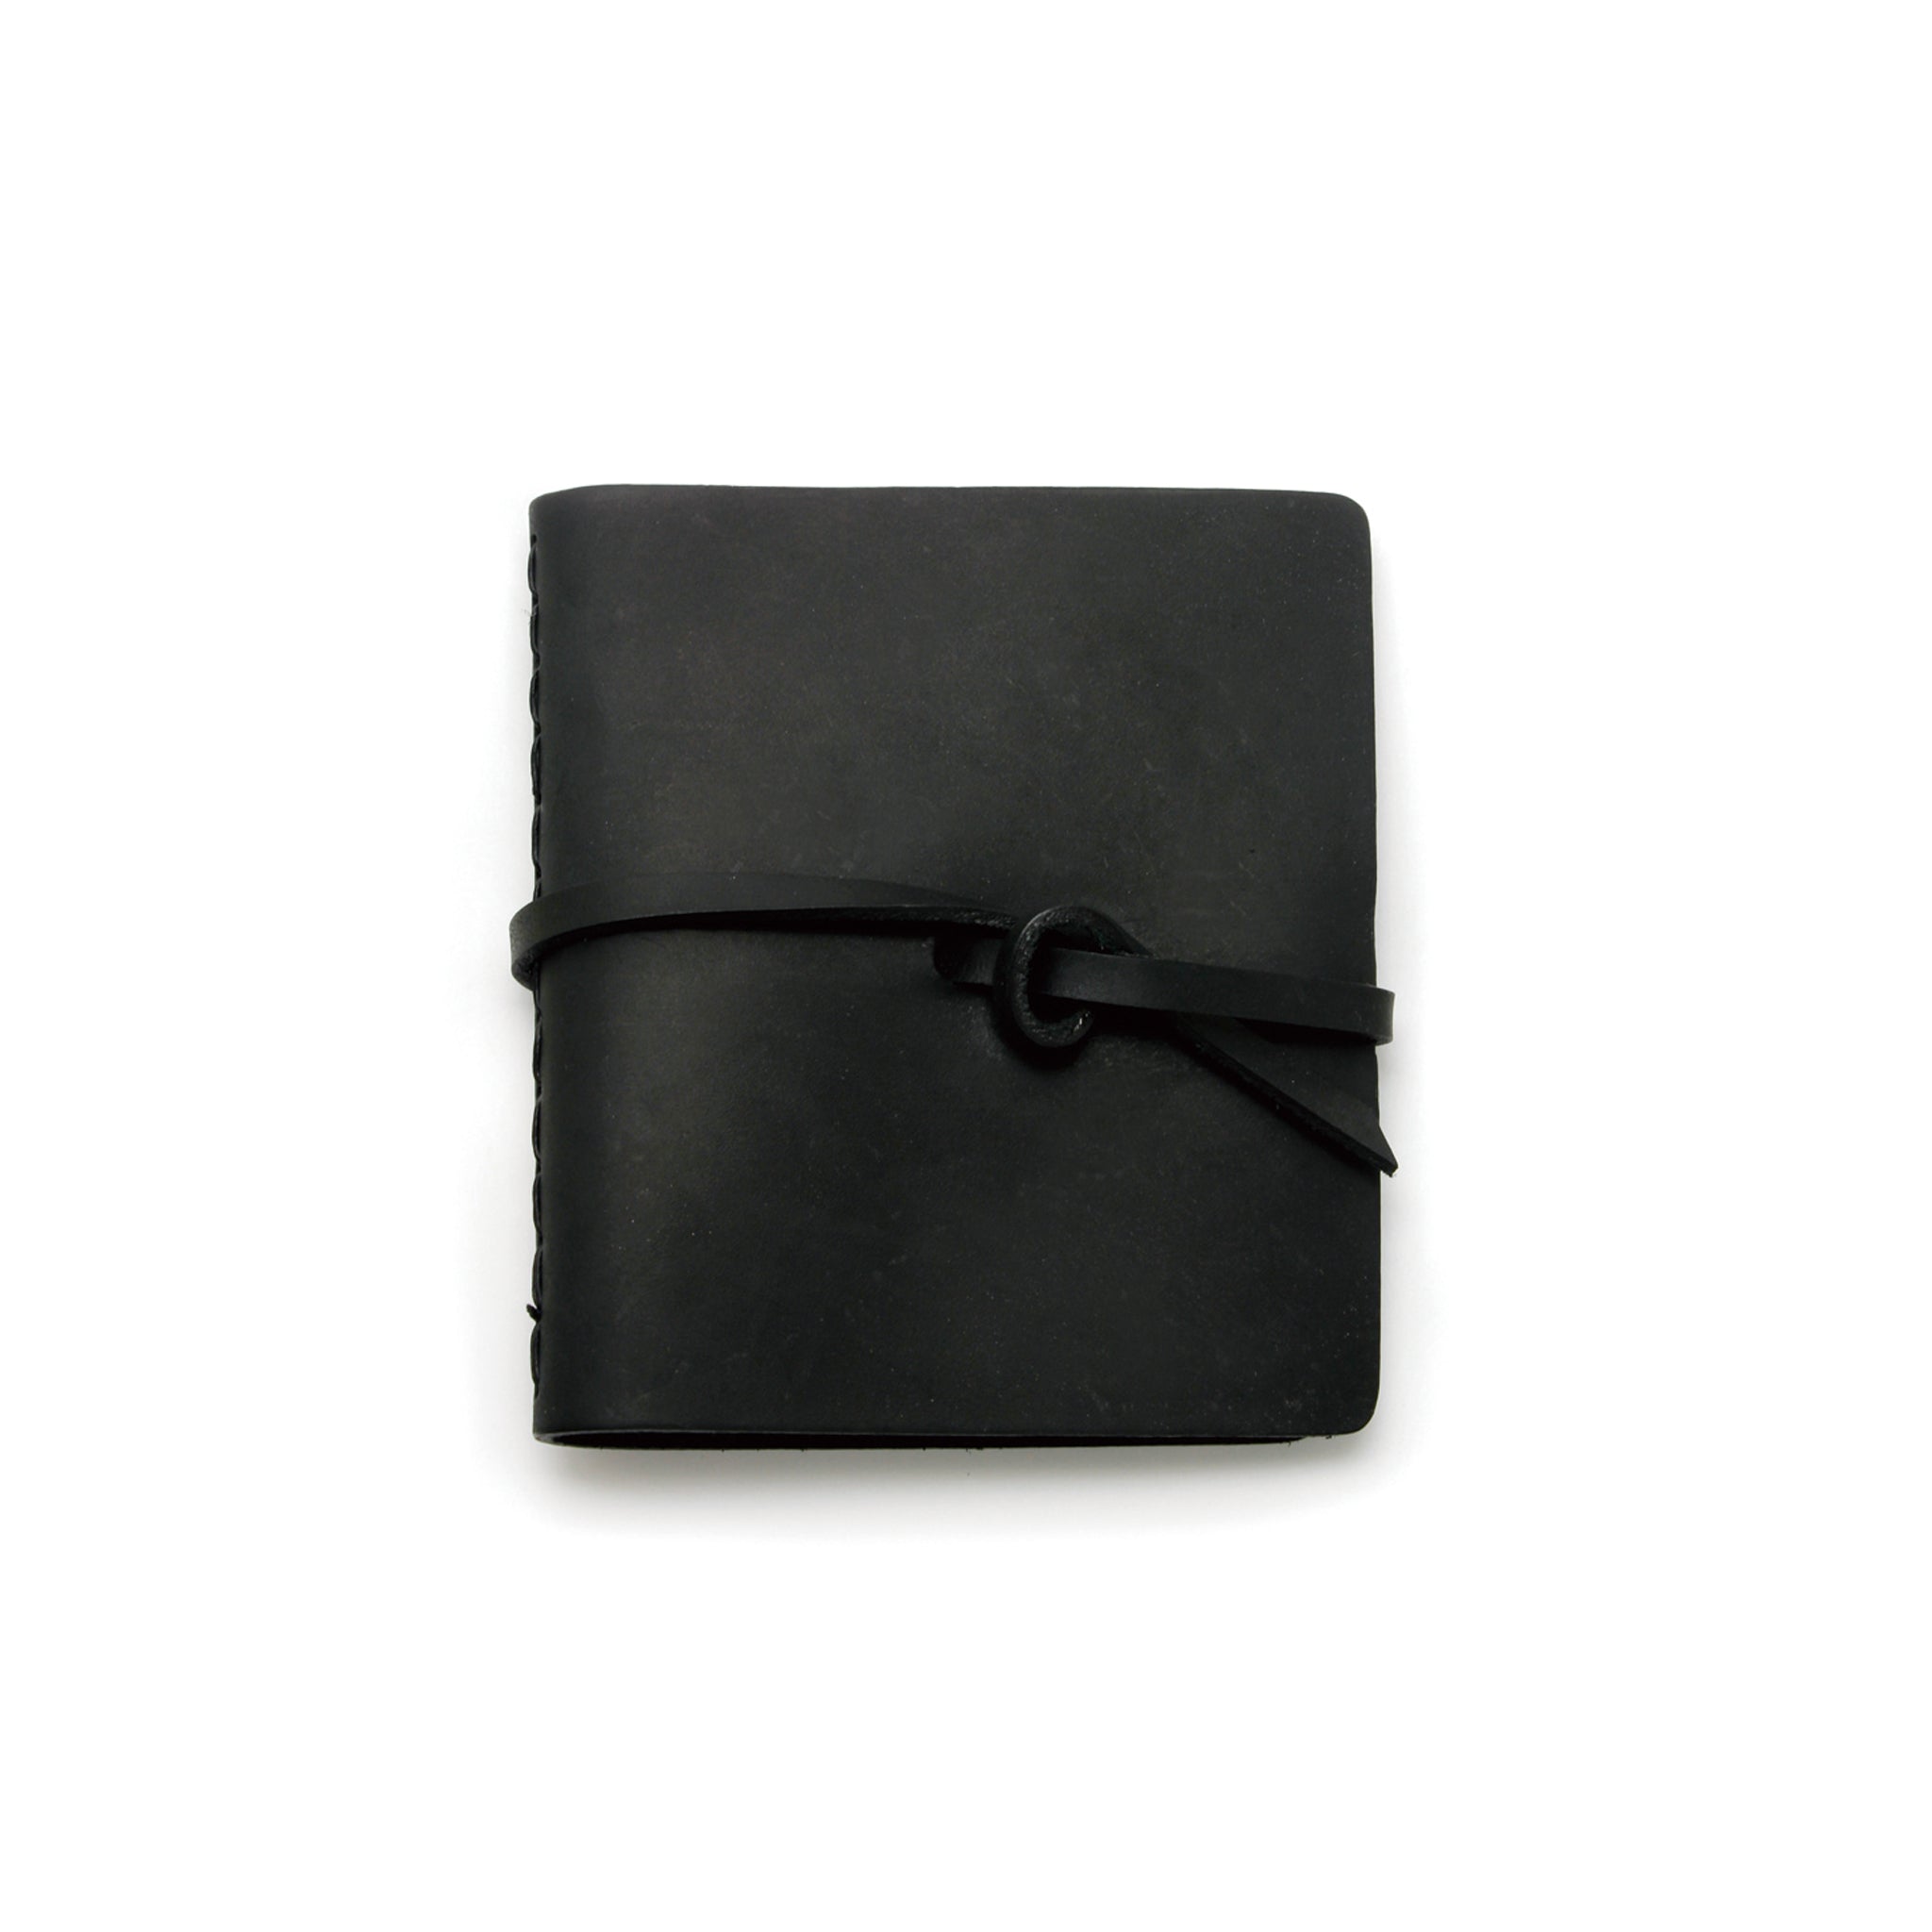 Leather Wrap Card Case L